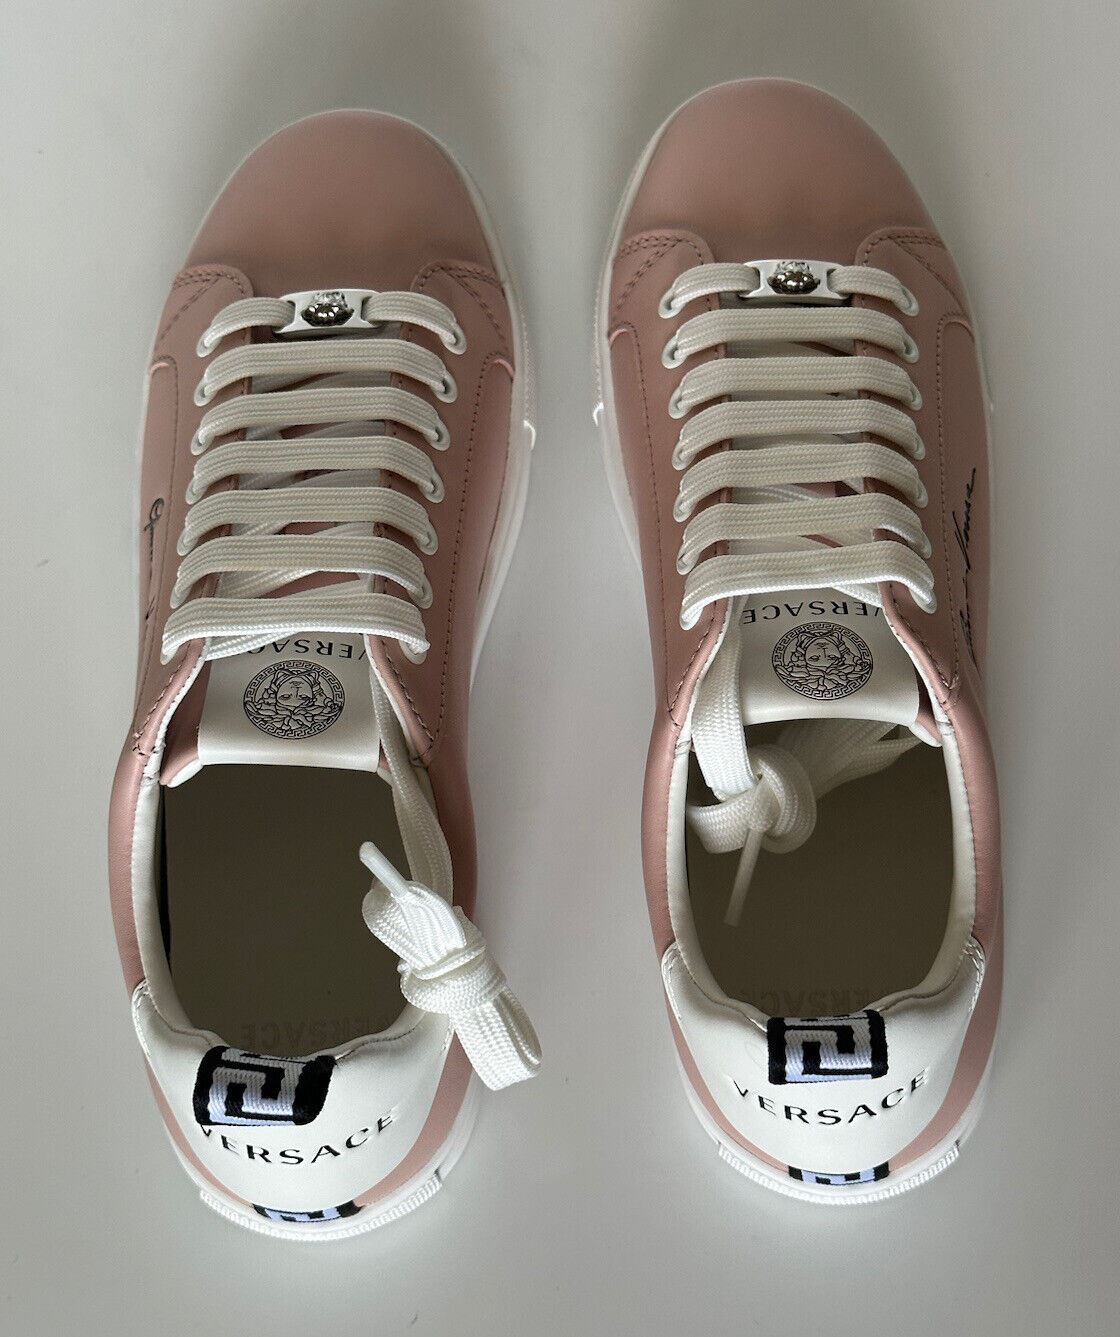 NIB $750 Versace Low Top Blush/White Leather Sneakers 9.5 US (39.5 Euro) 1002773